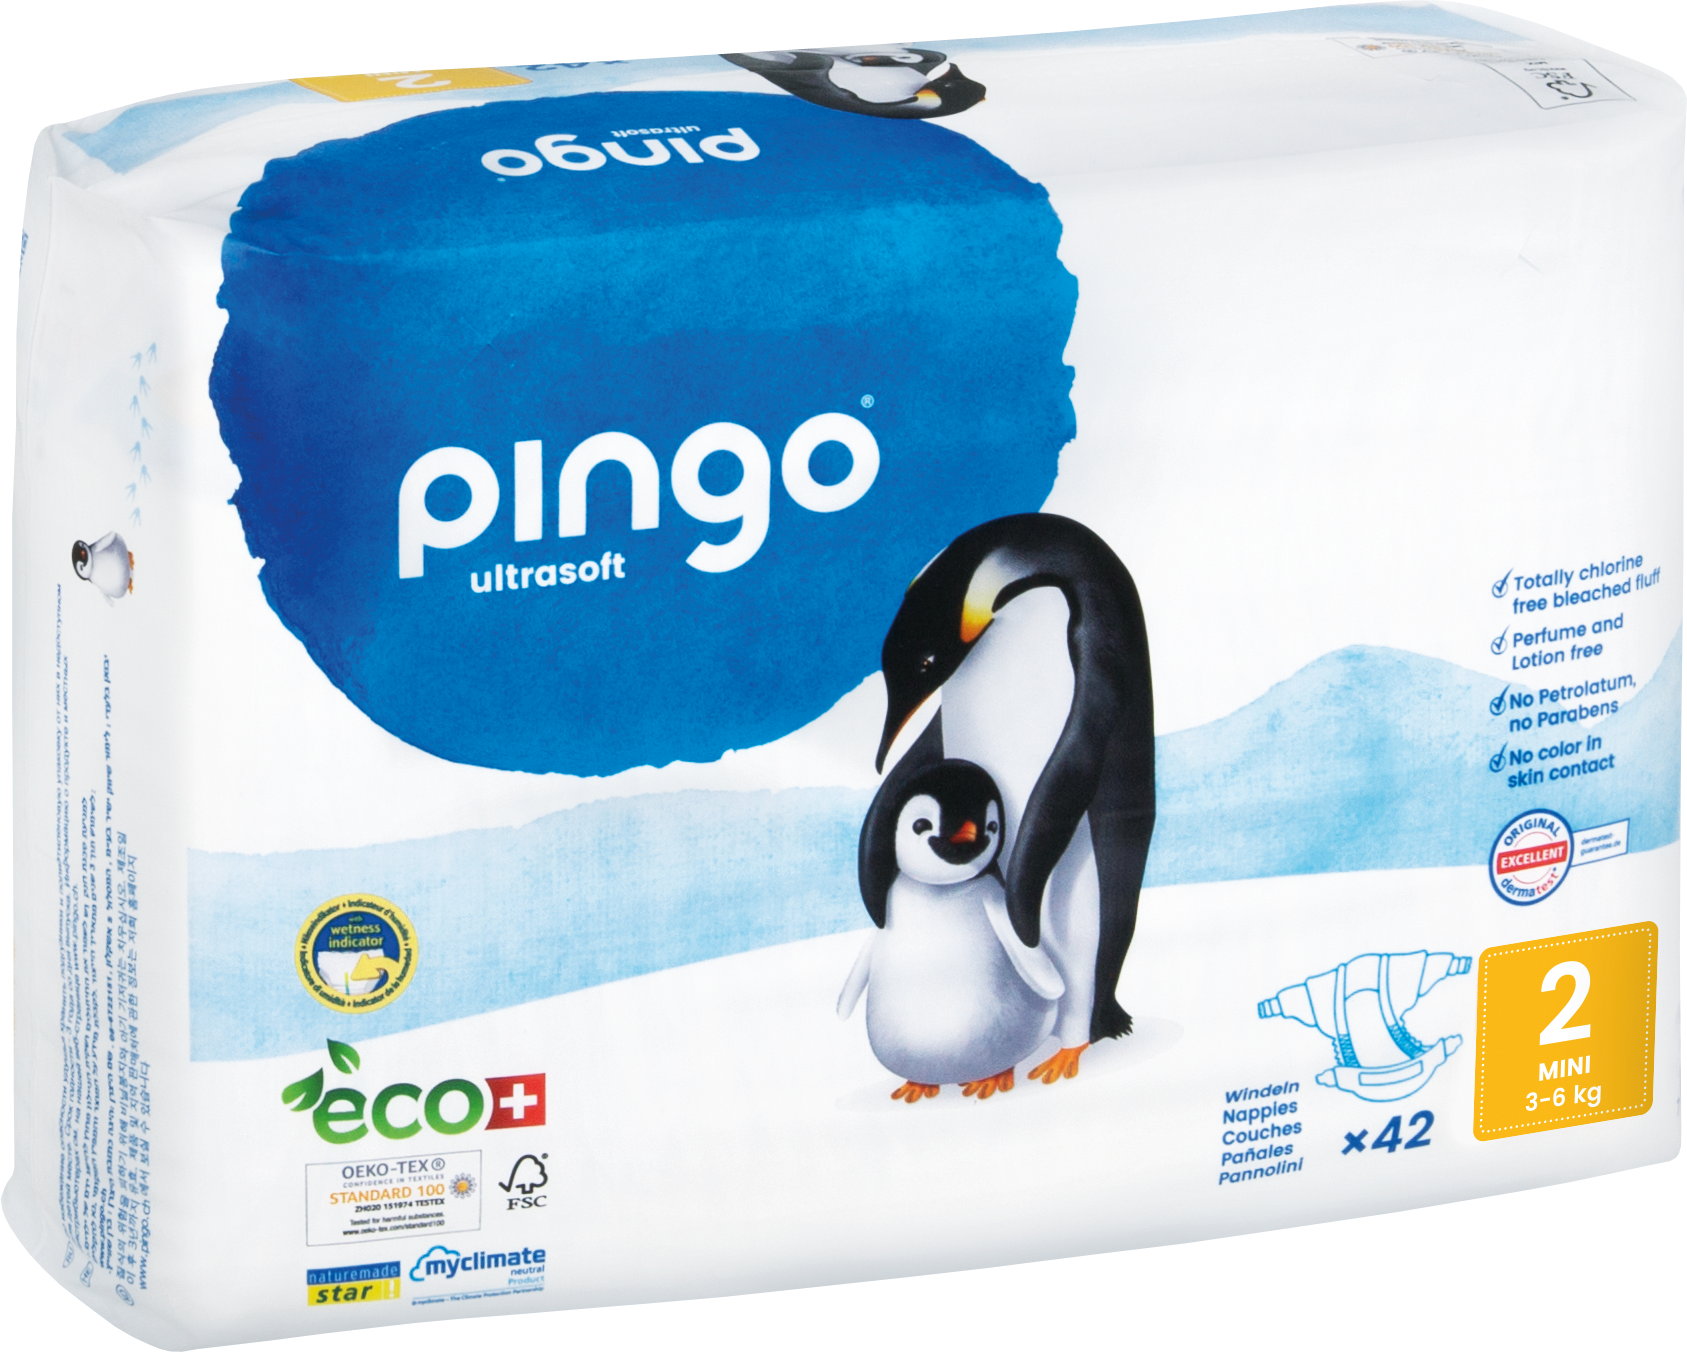 Bio Windeln Mini 3-6kg Pinguin – Pingo Swiss